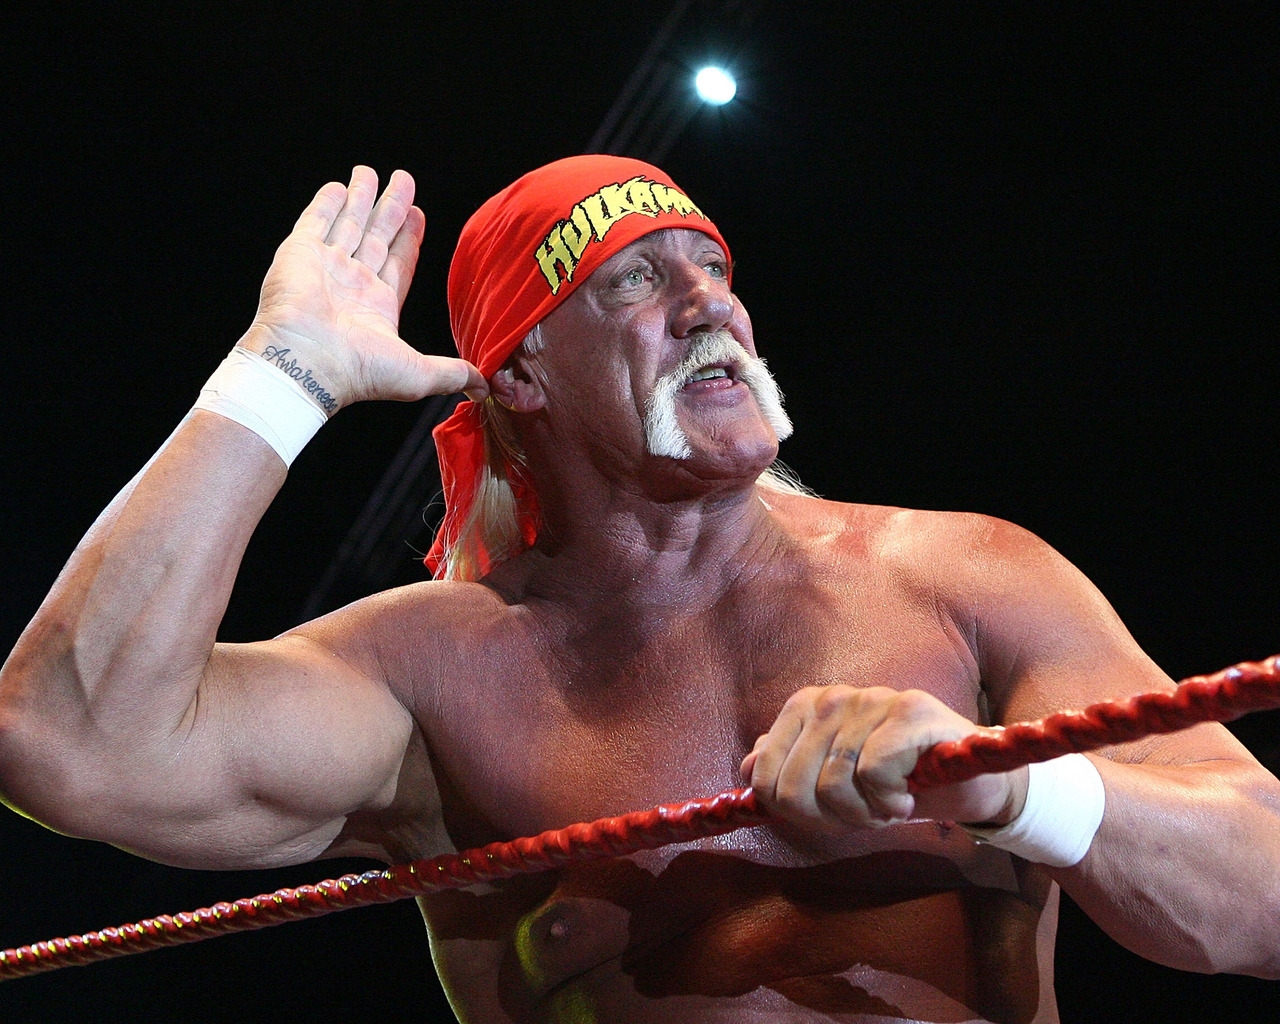 Hulk Hogan Salute for 1280 x 1024 resolution